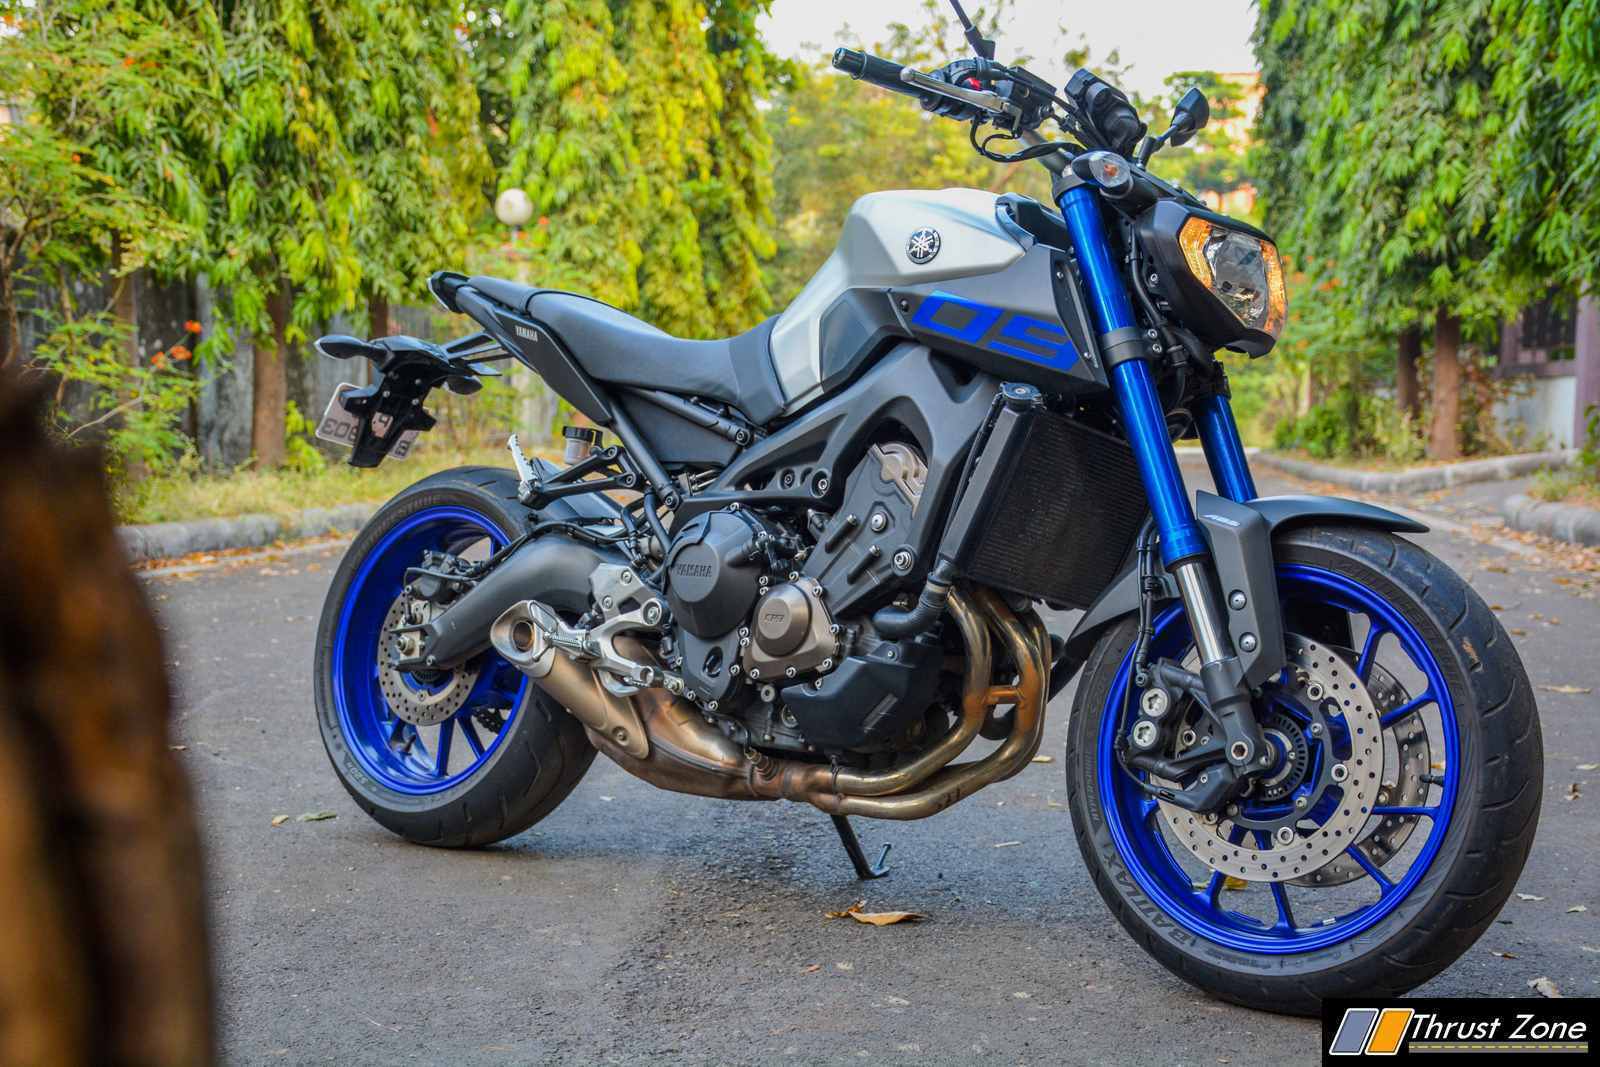 https://www.thrustzone.com/wp-content/uploads/2017/11/Yamaha-MT-09-India-Ride-Review-22.jpg